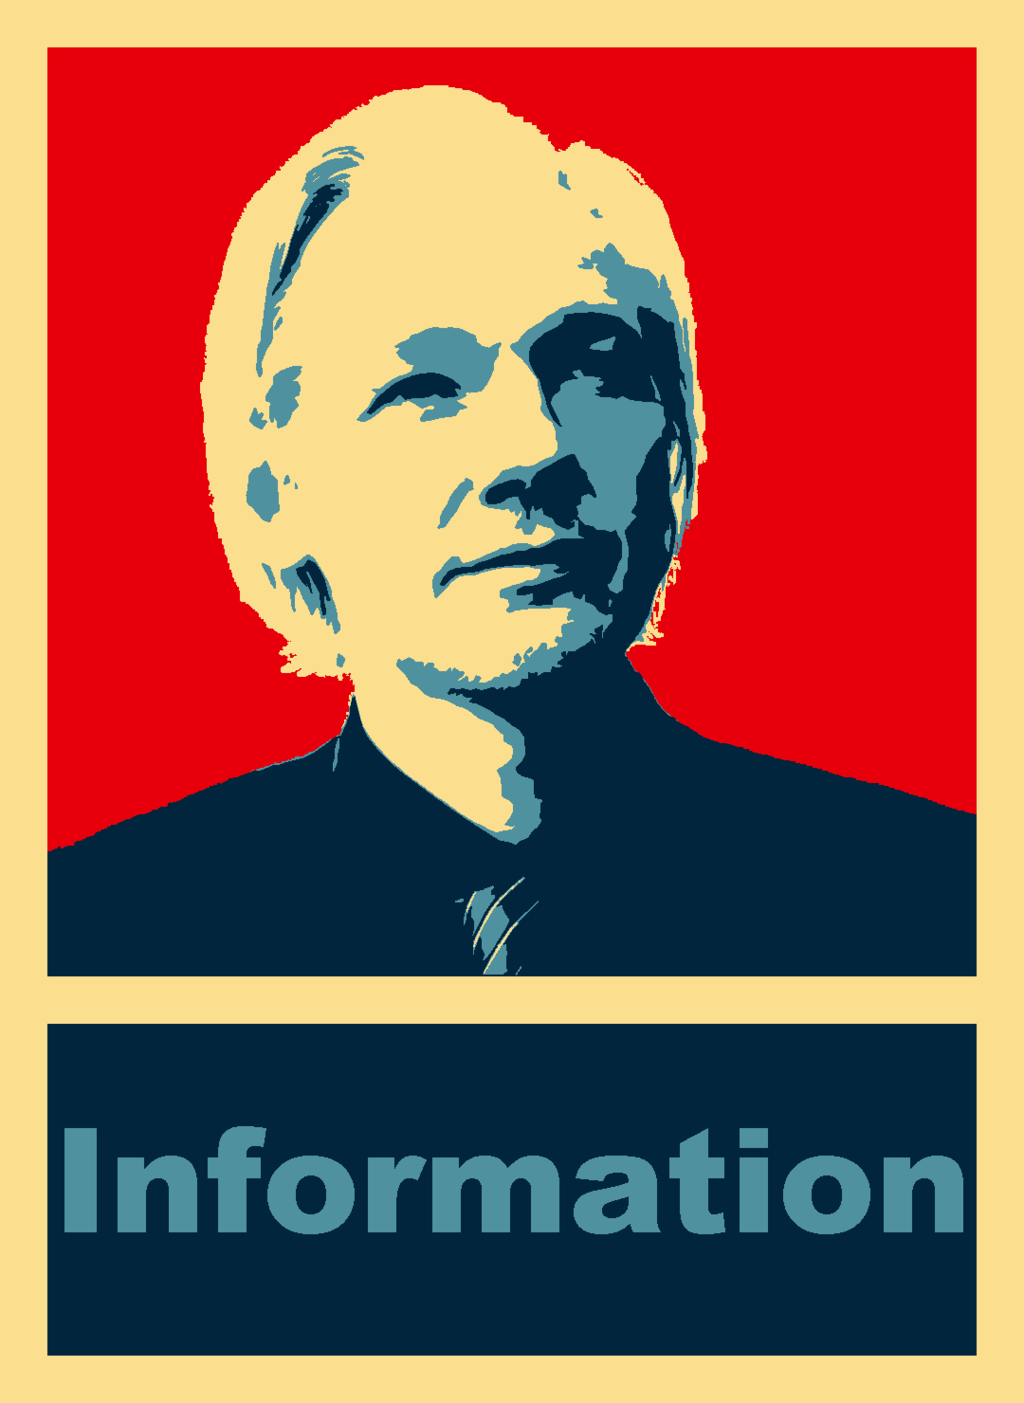 Julian Assange Campaign Poster by Zaros BobTheCat on DeviantArt